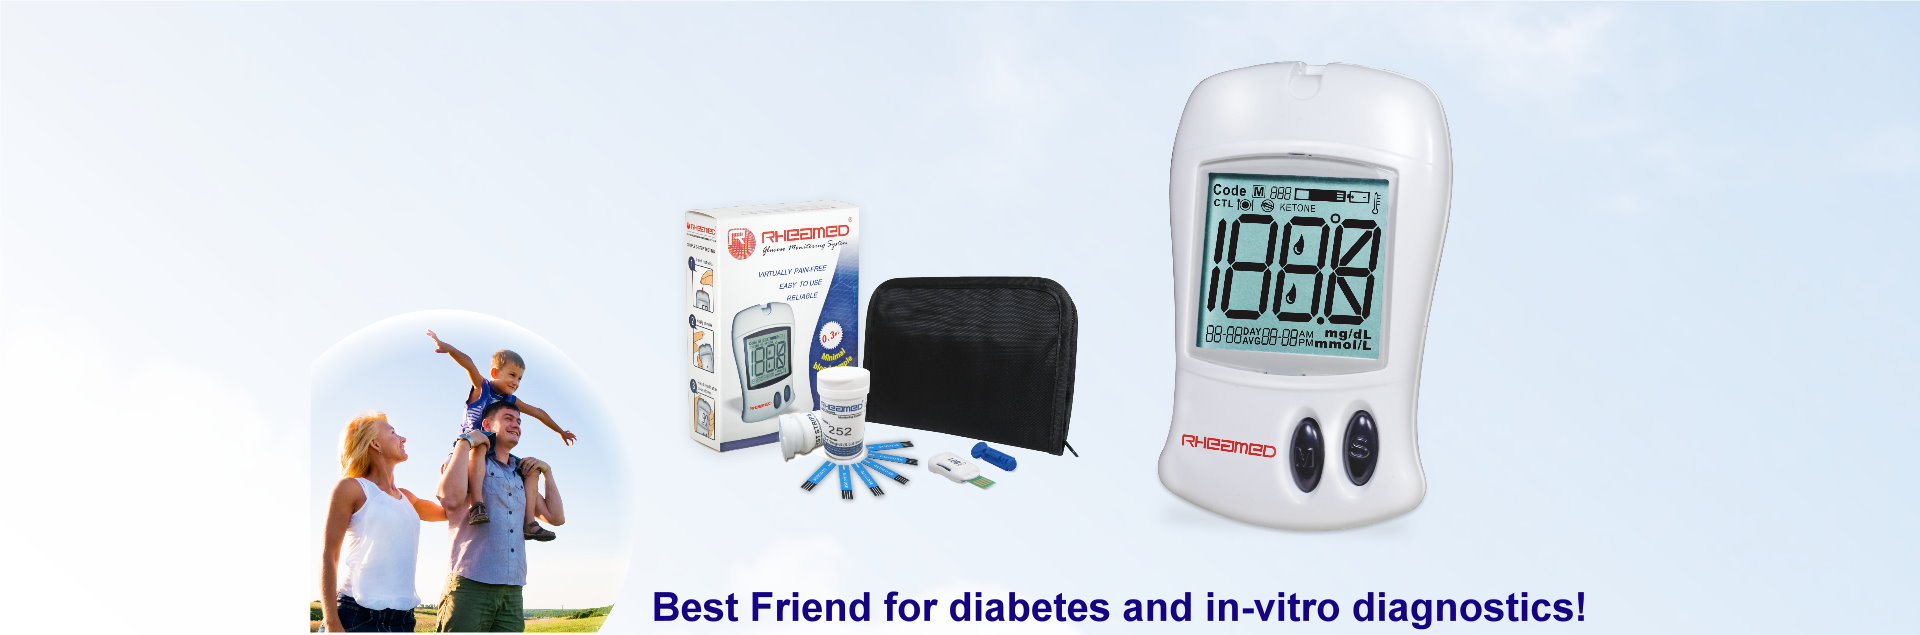 The best friend of diabetics